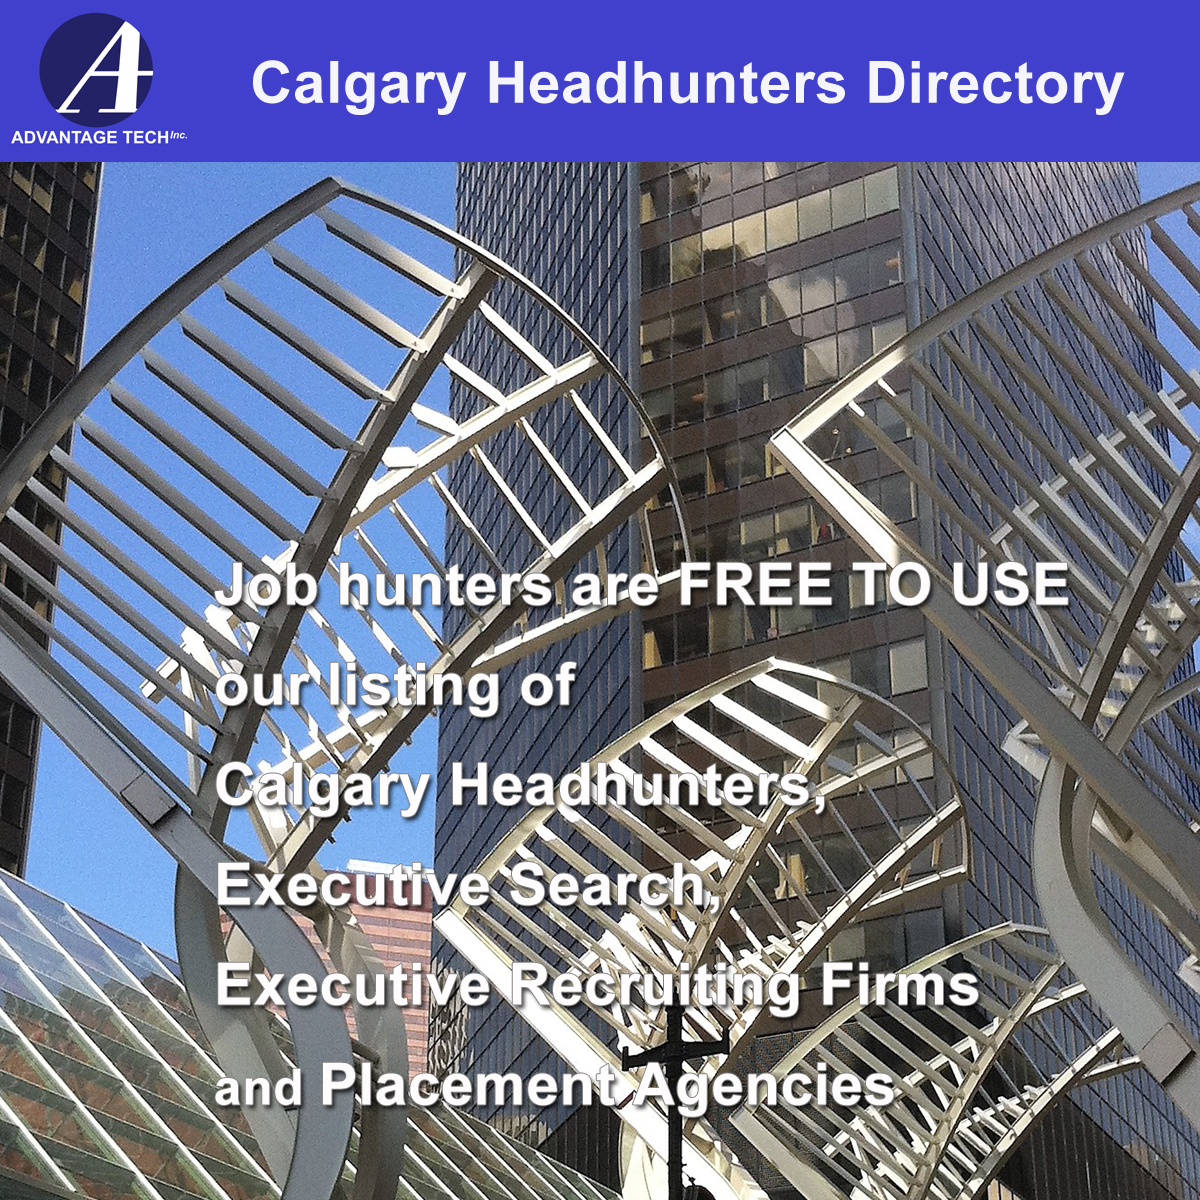 Advanta Tech Inc - Calgary Headhunters Directory